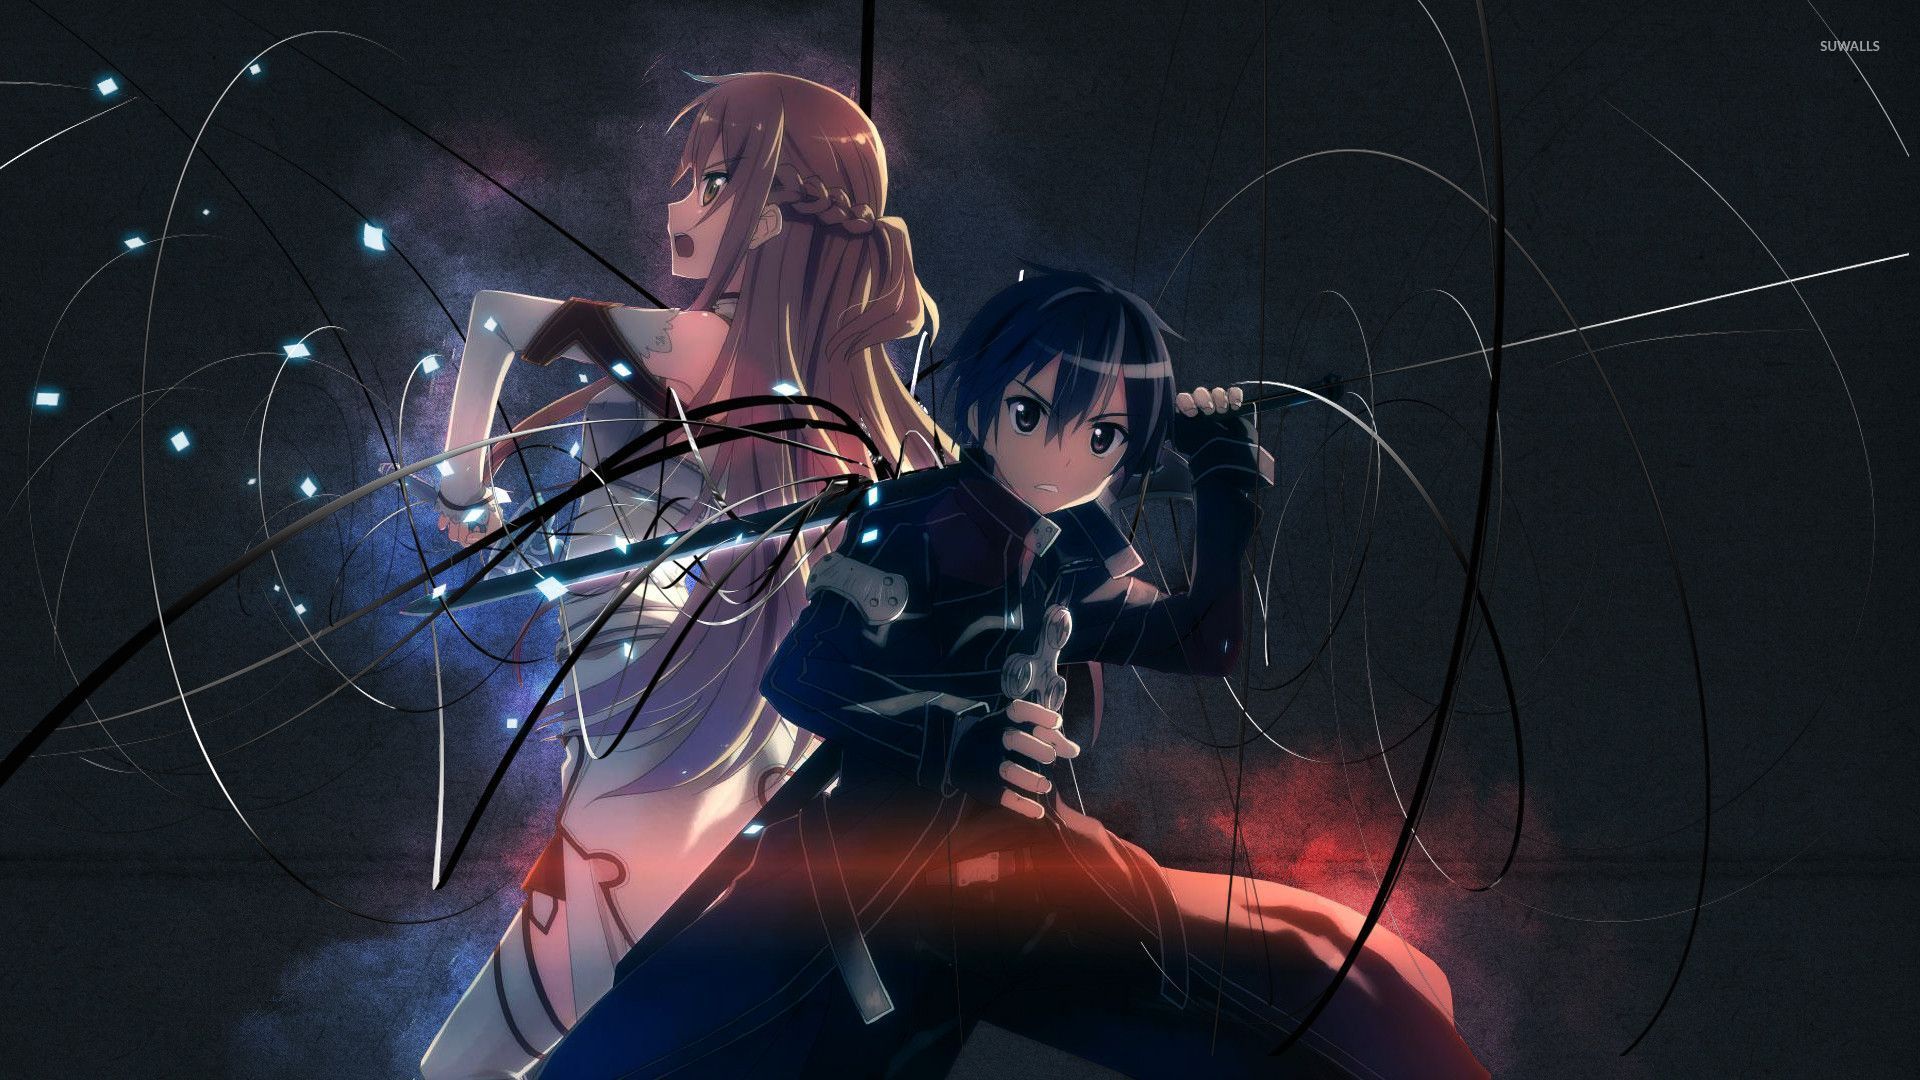 Asuna and Kirito - Sword Art Online wallpaper - Anime wallpapers - #27571